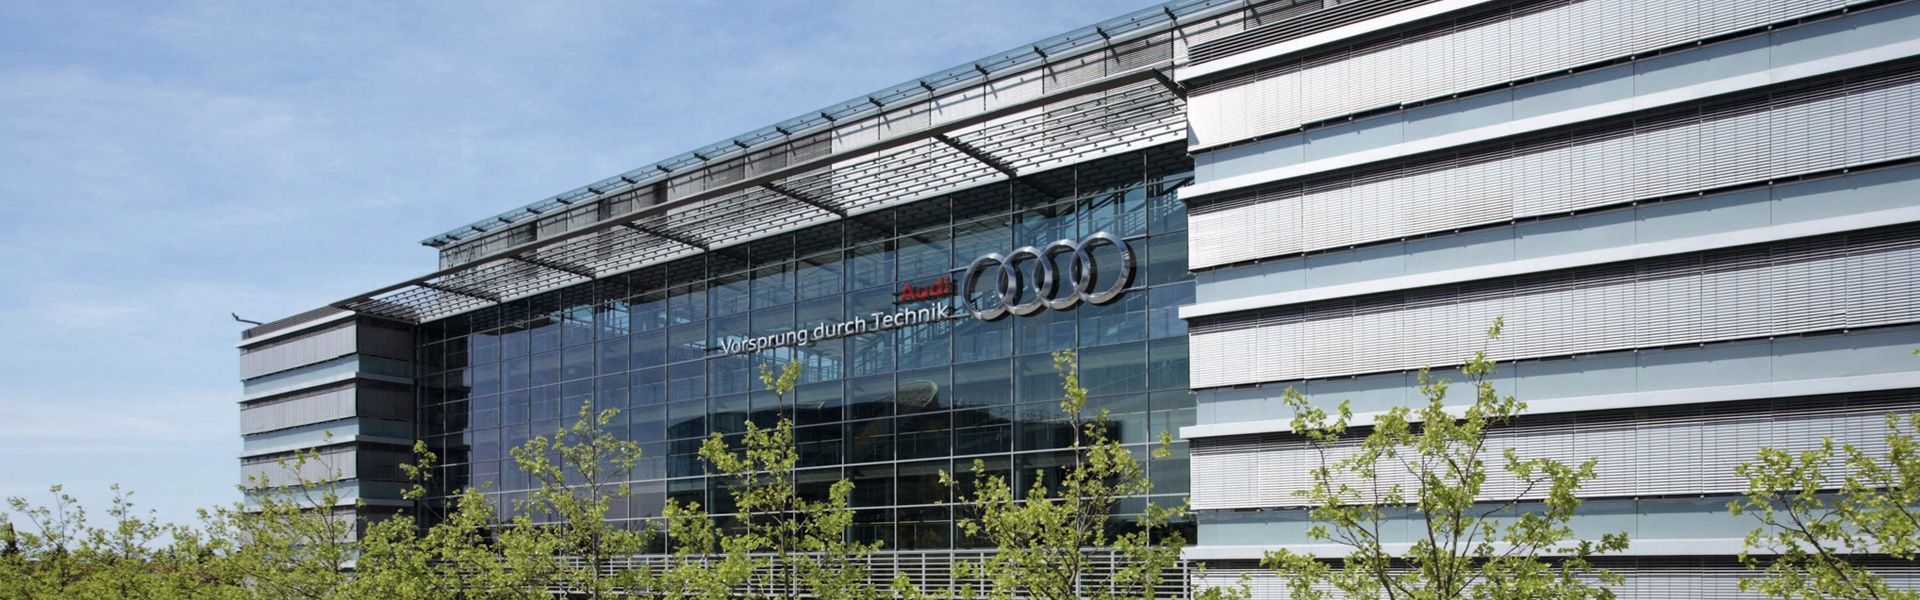 The Audi company headquarters